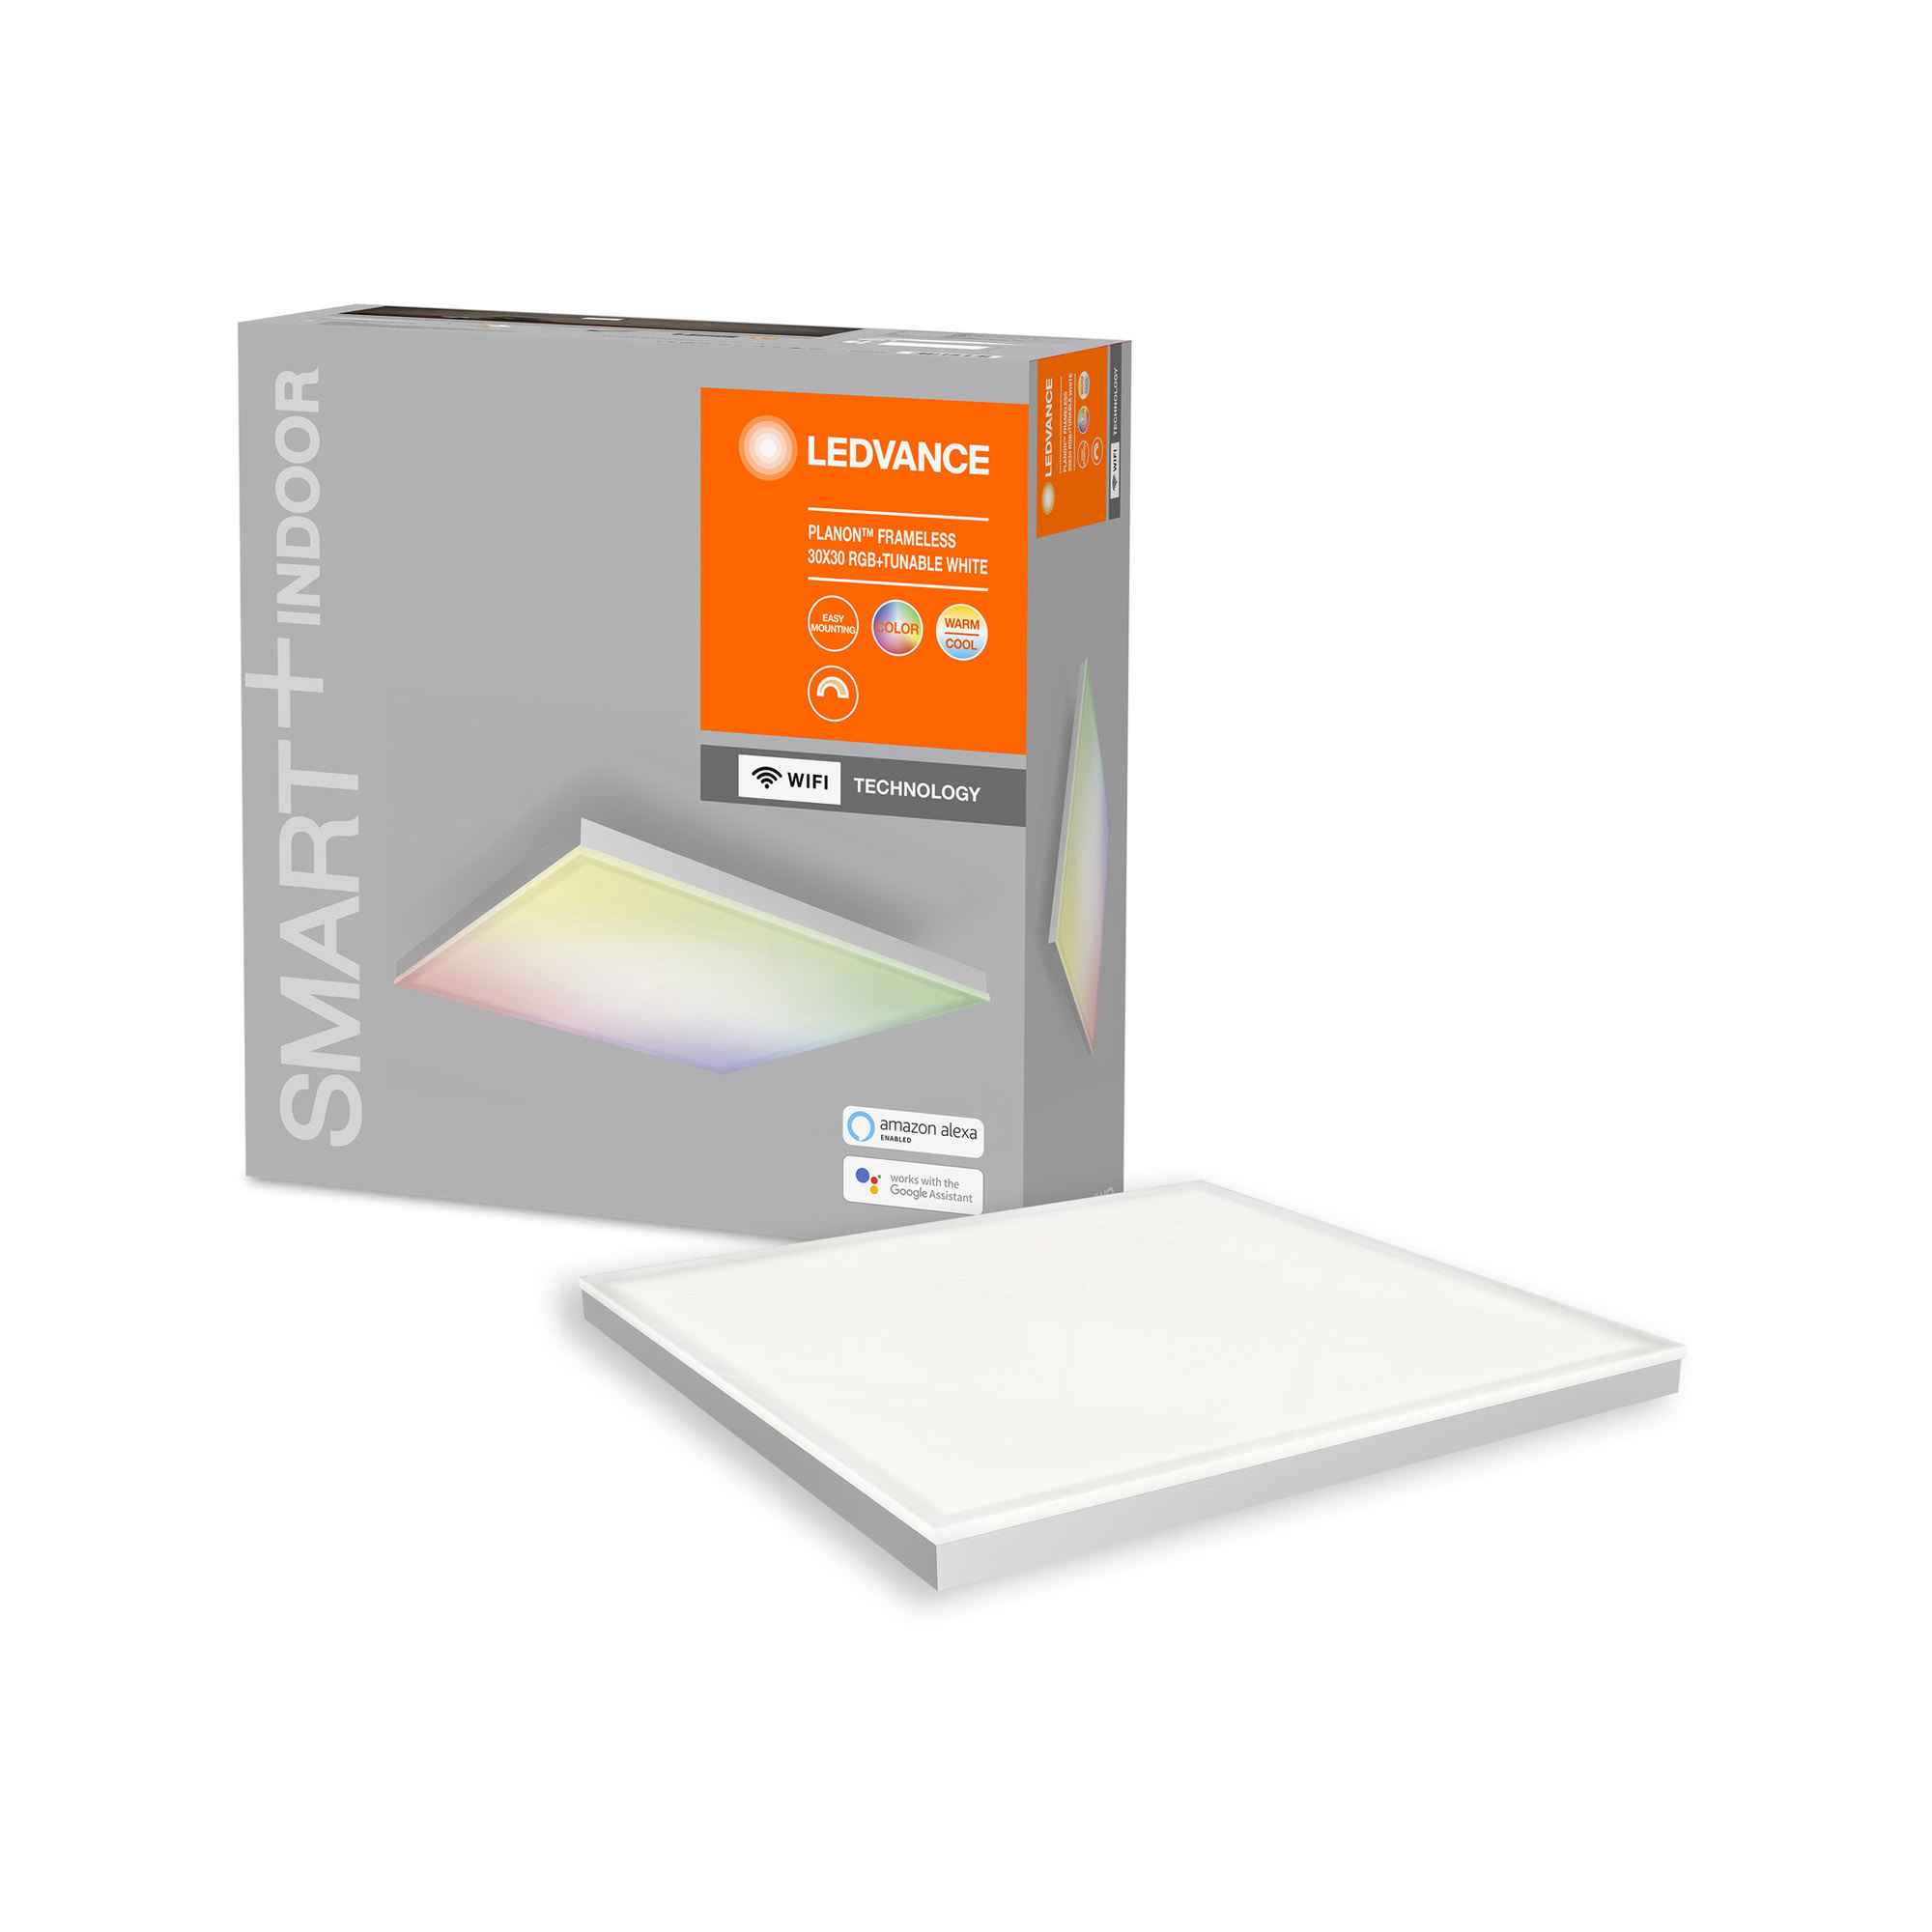 LEDVANCE SMART+ WiFi RGB Tunable White LED Panel PLANON FRAMELESS 30x30cm 1500lm